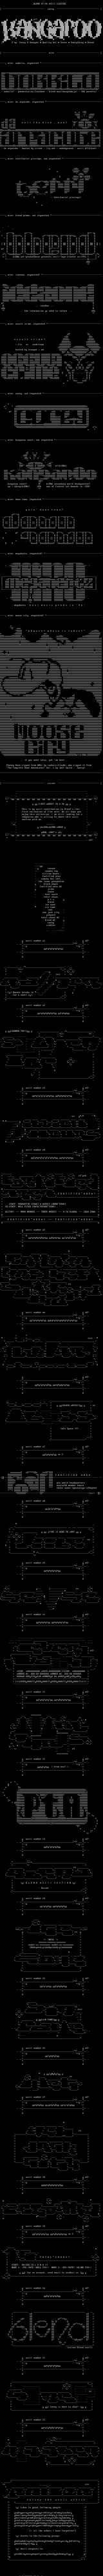 July Blend Ascii Cluster by Multiple artists